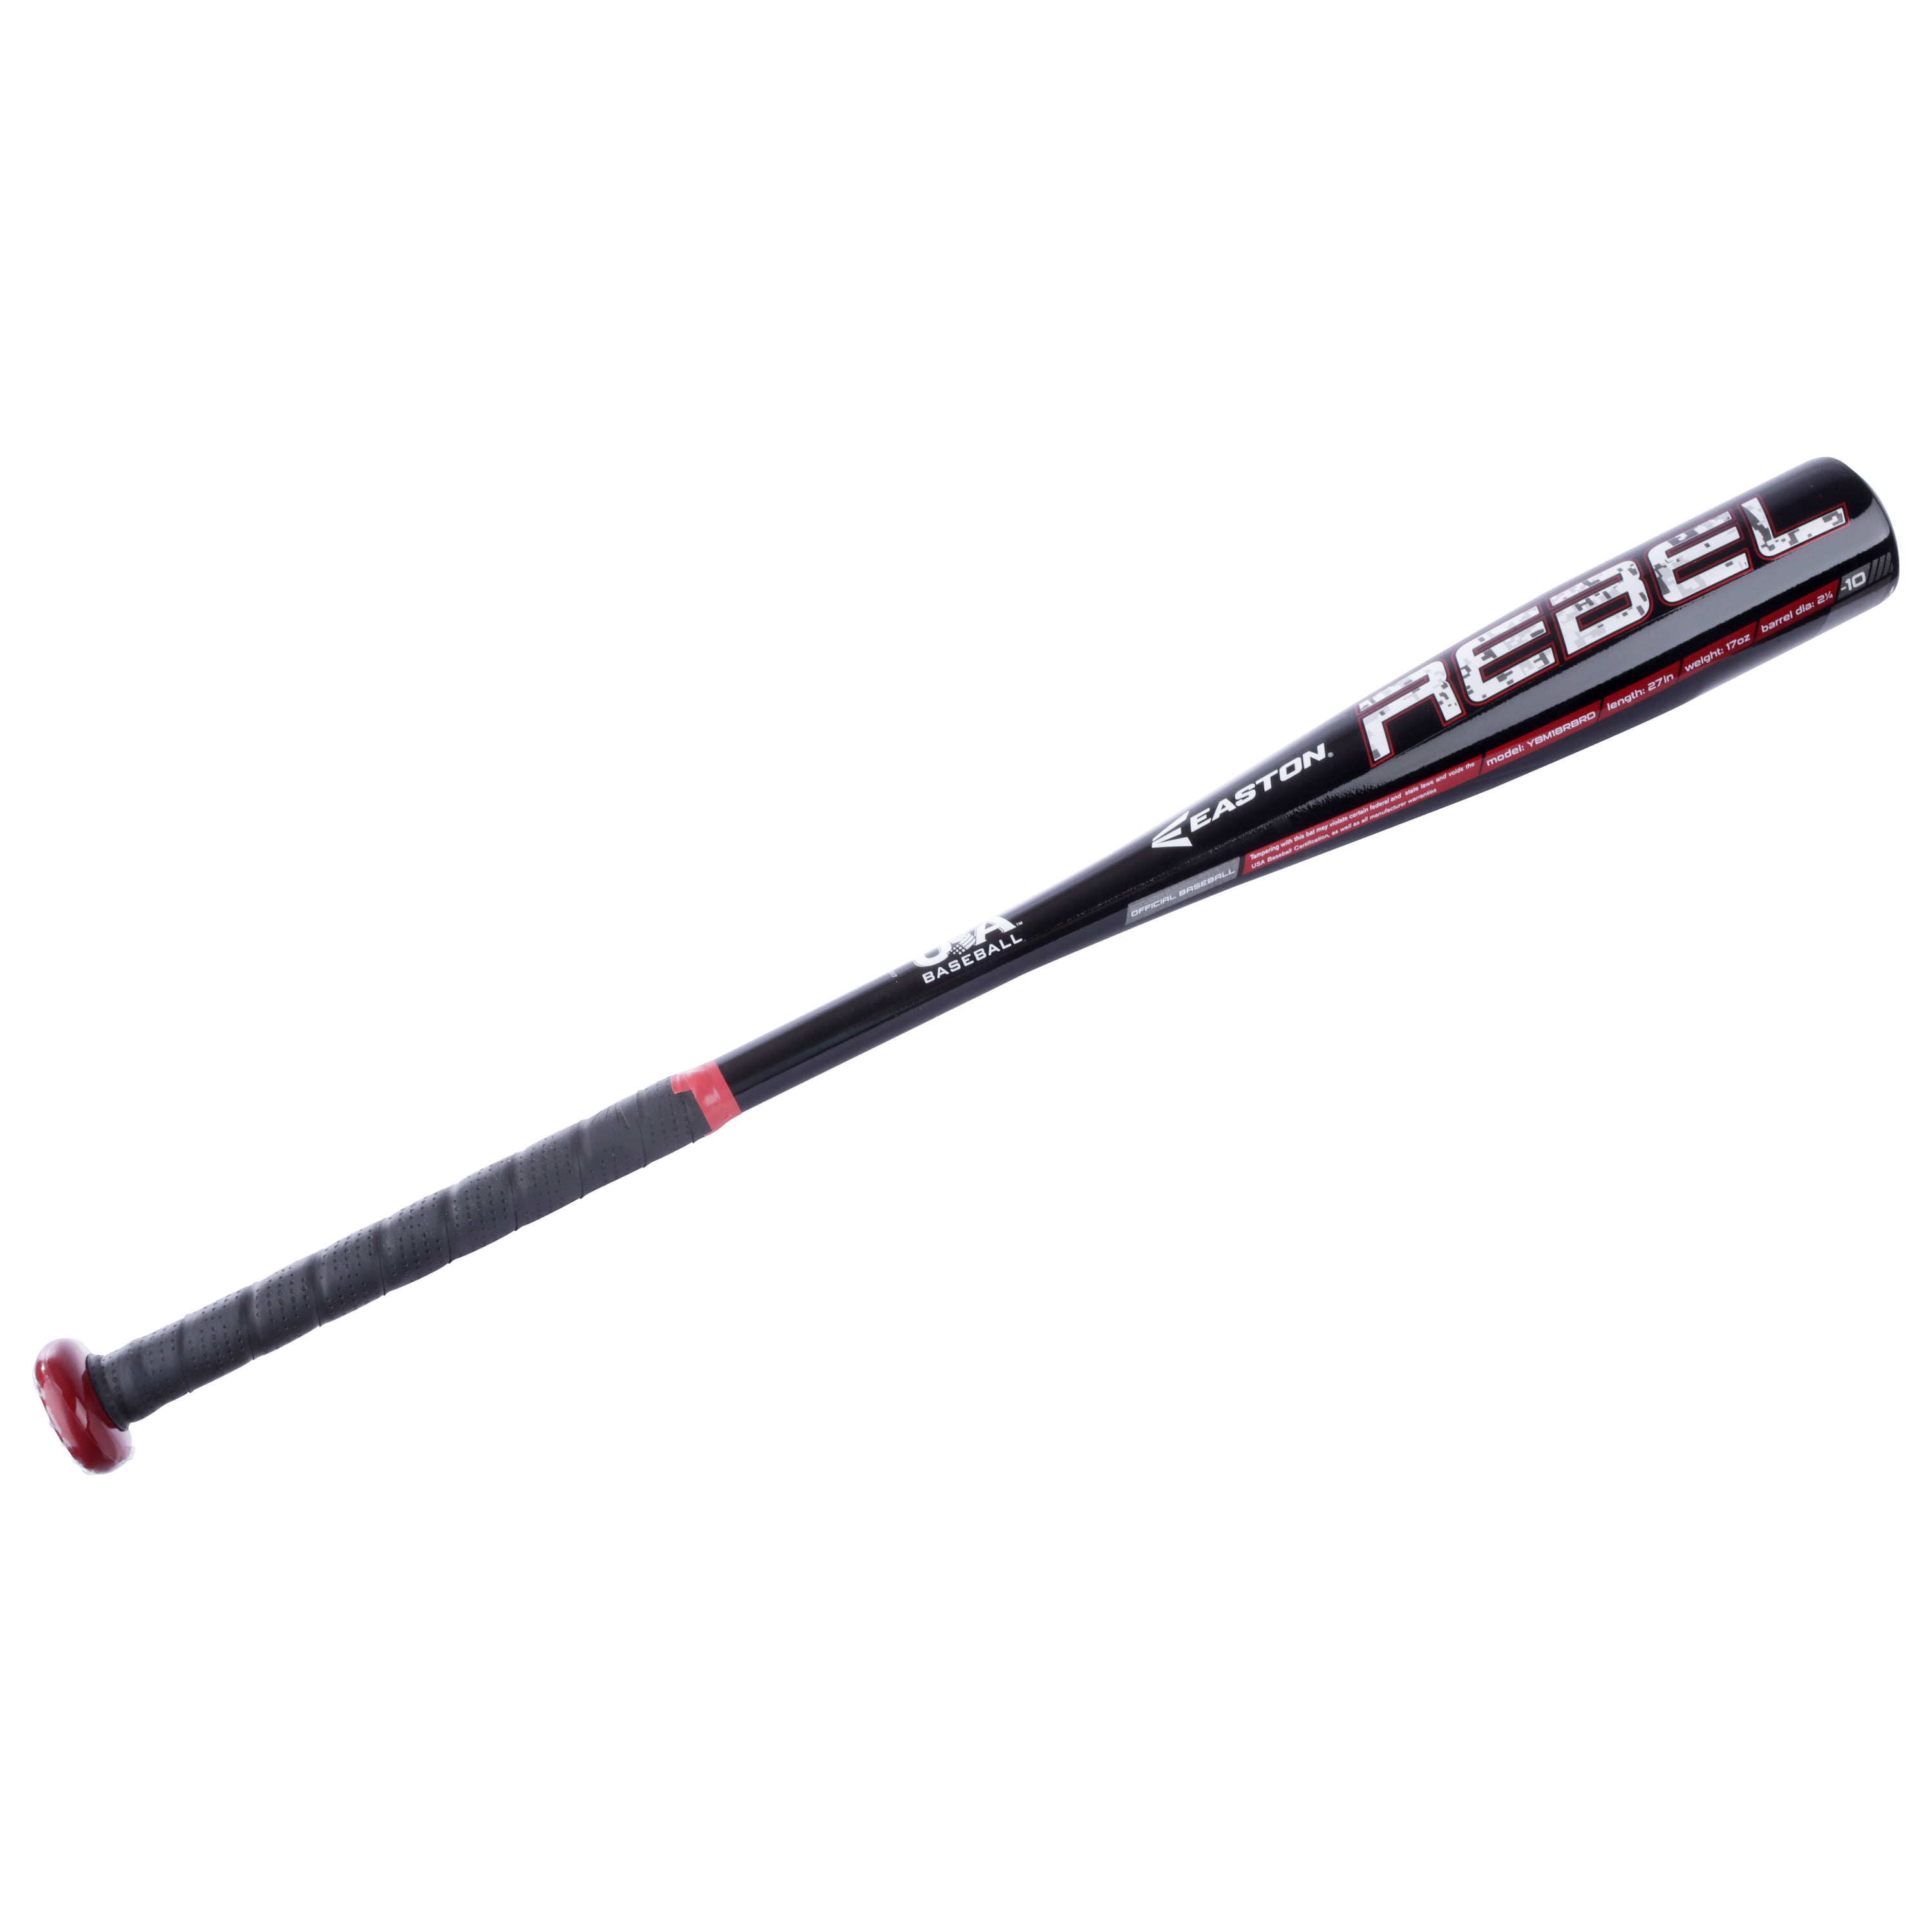 2 1/4" Baril 17 oz 27 in environ 481.93 g Nouveau Easton Rebel YBM18RB Youth Baseball Bat environ 68.58 cm 